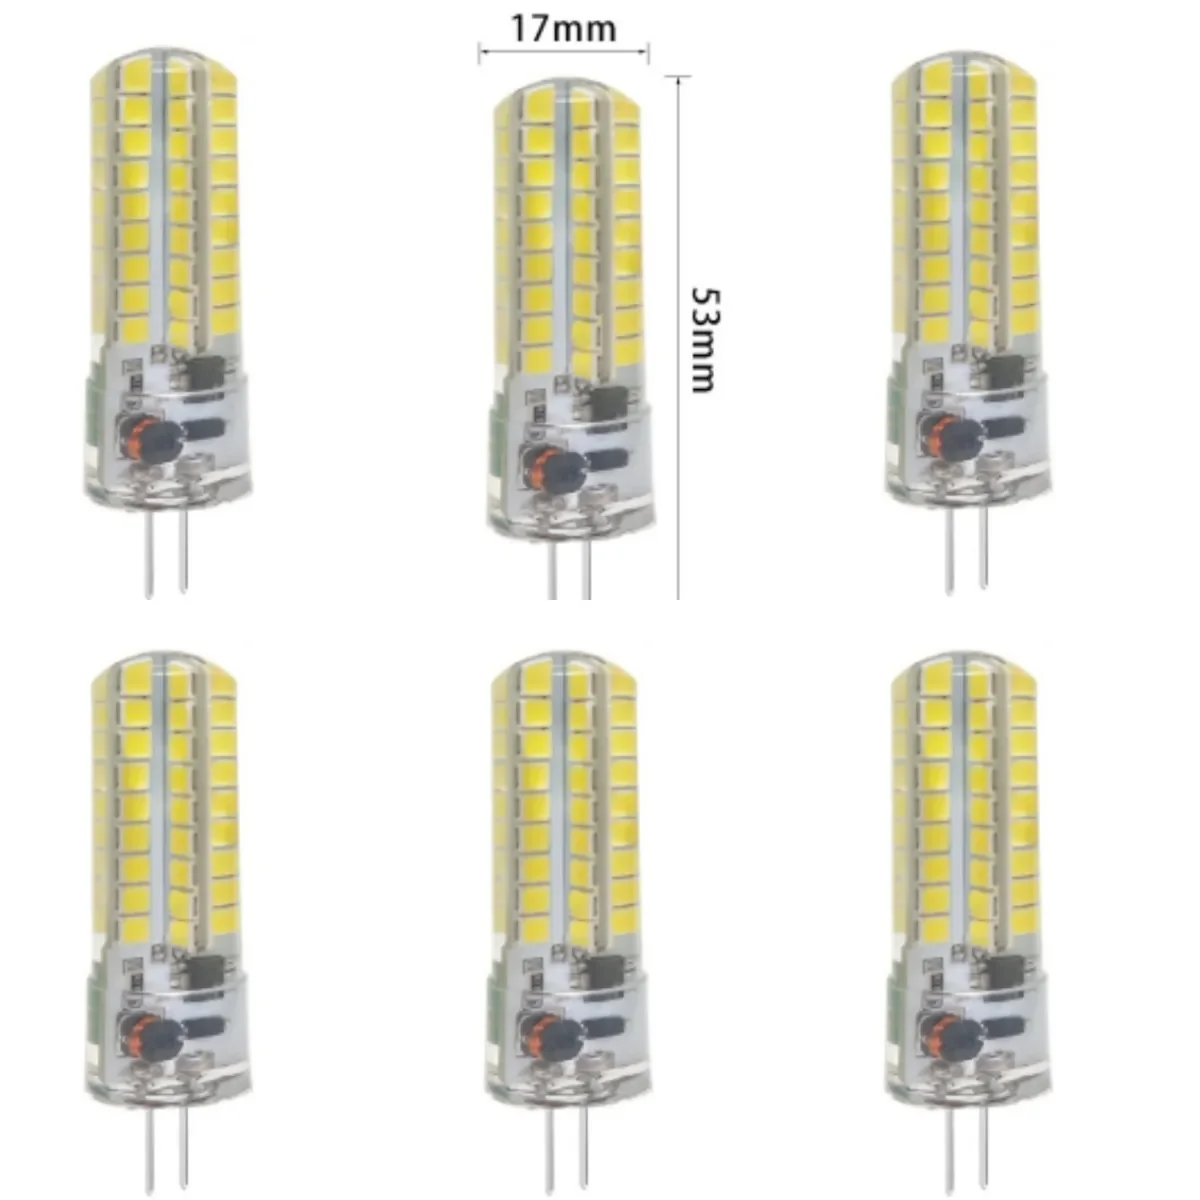 

6x G4 3014 SMD Led Bulb AC DC 12V 220V Replace Halogen Bi-pin Lamp LED Bulb 3W 5W 7W 9W Warm White/Cold White Led Lights